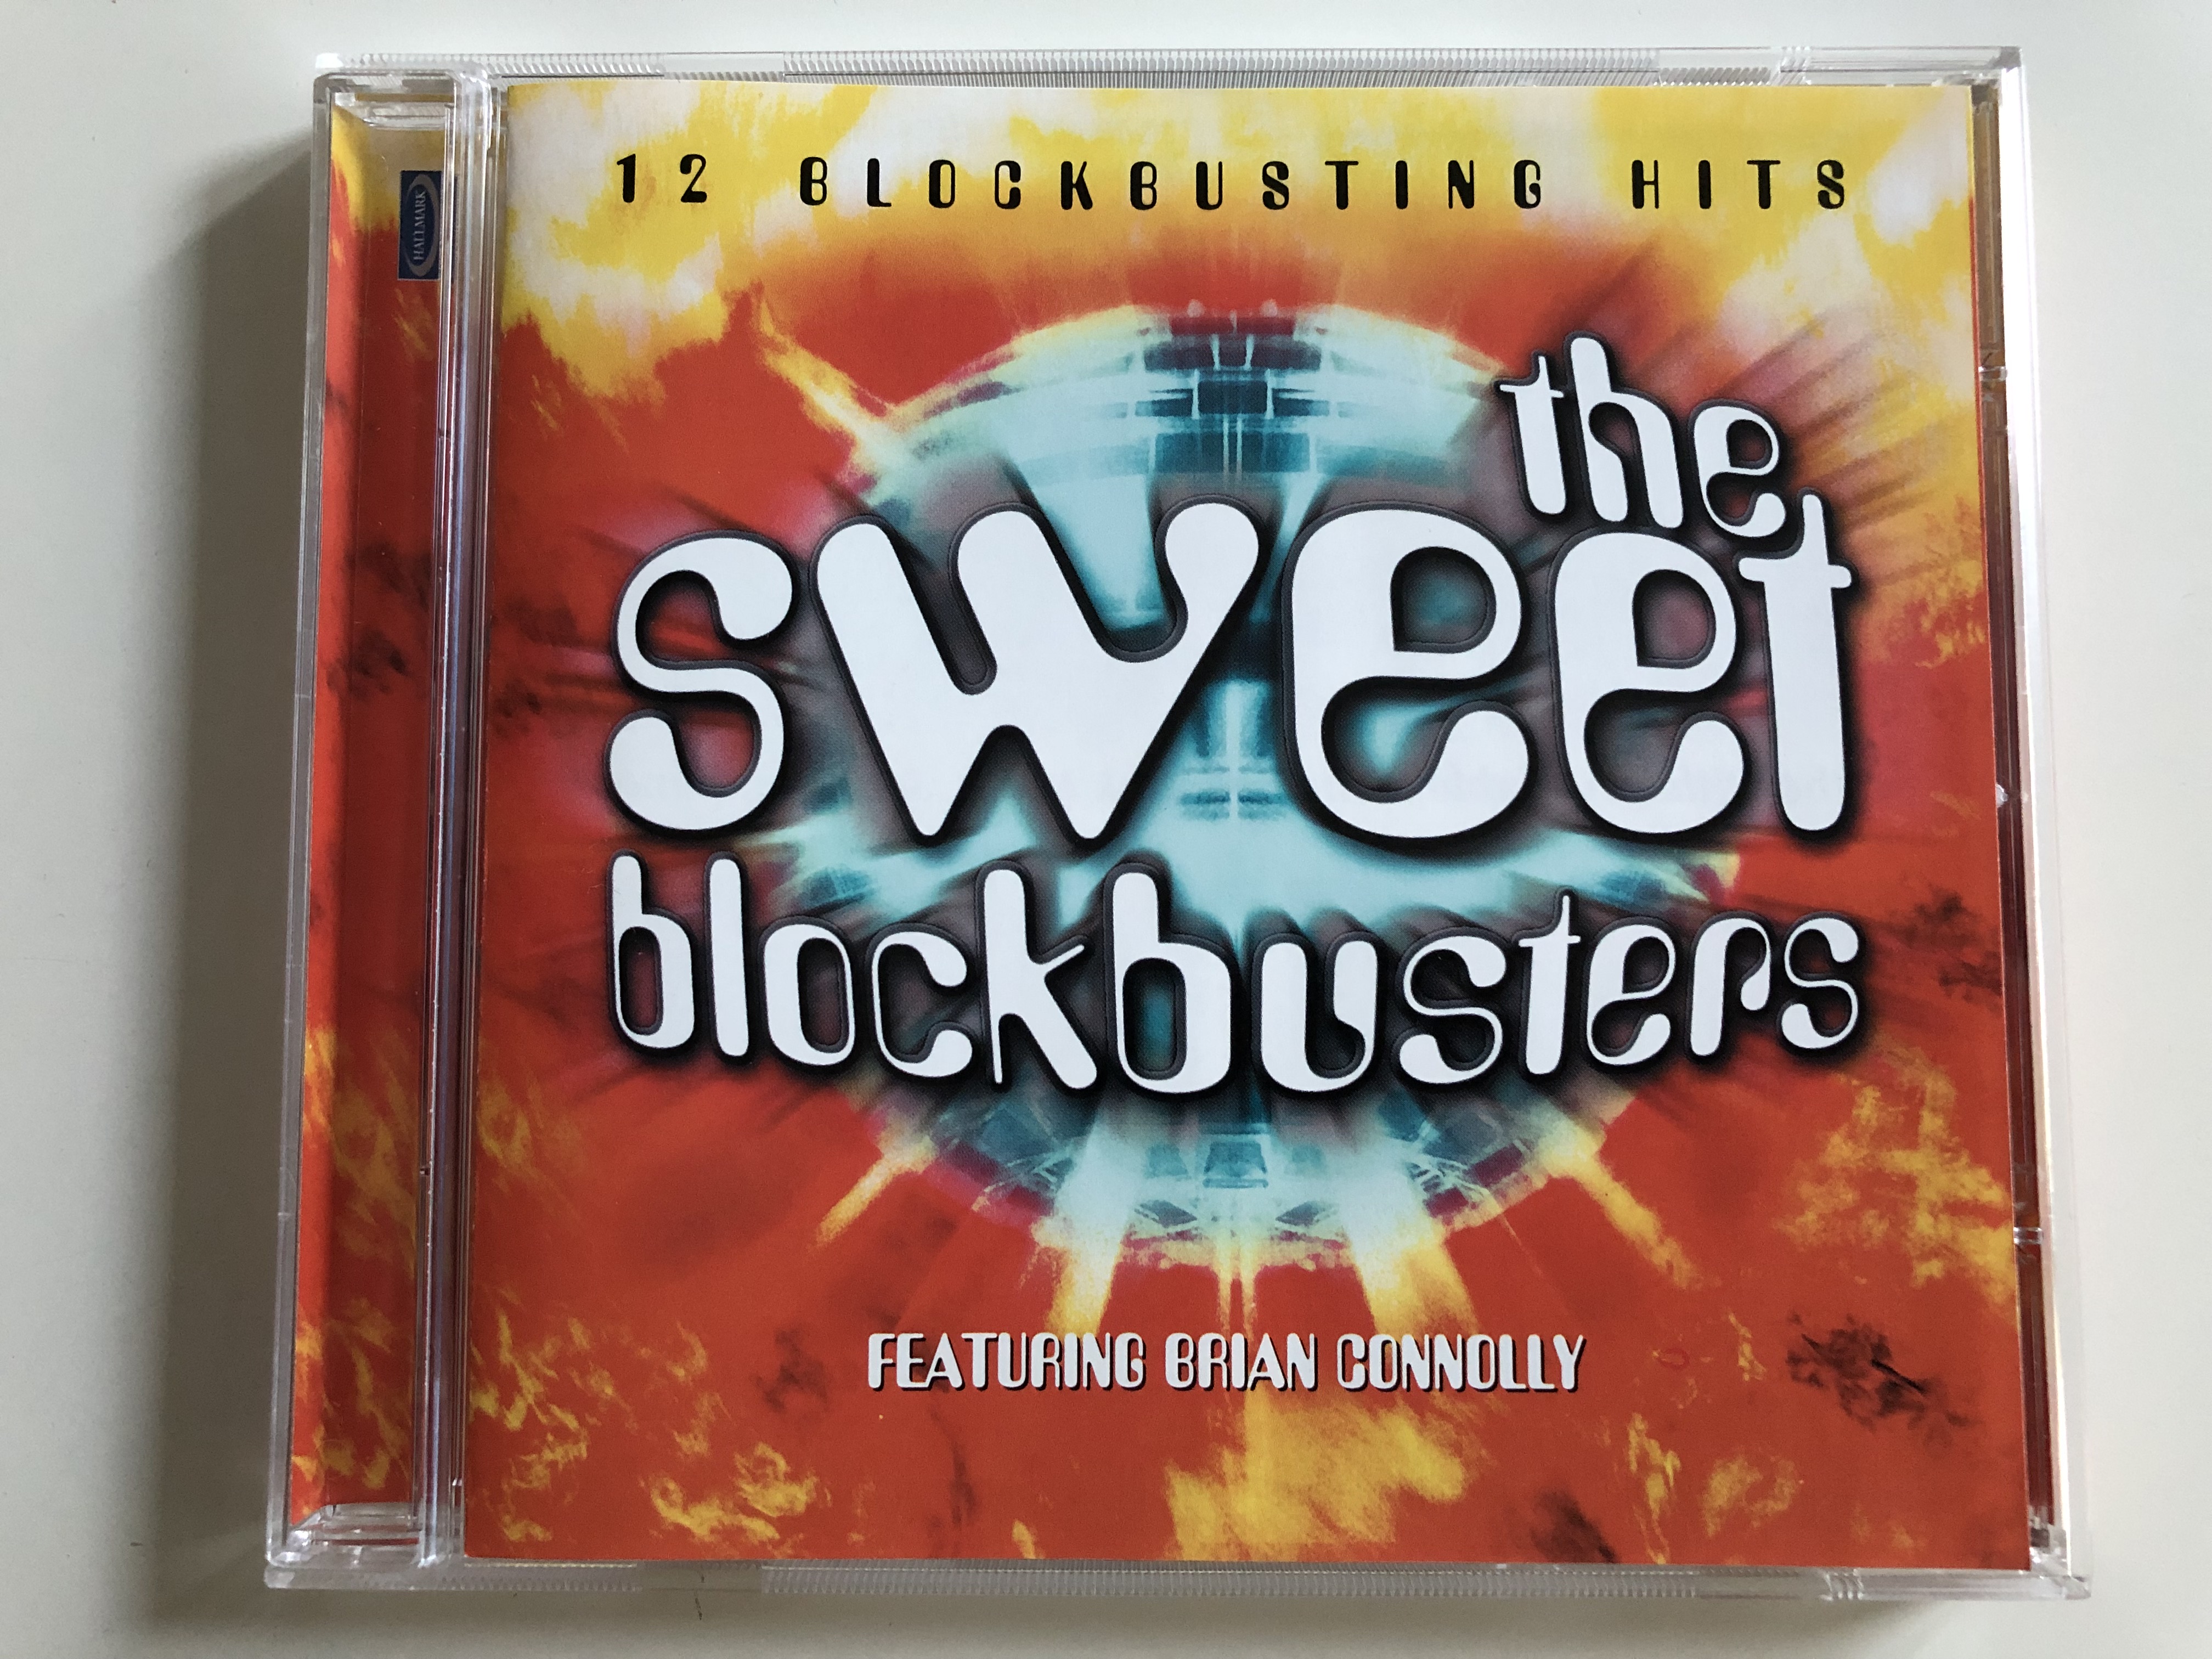 the-sweet-blockbusters-12-blockbusting-hits-featuring-brian-connolly-hallmark-music-audio-cd-2002-702362-1-.jpg